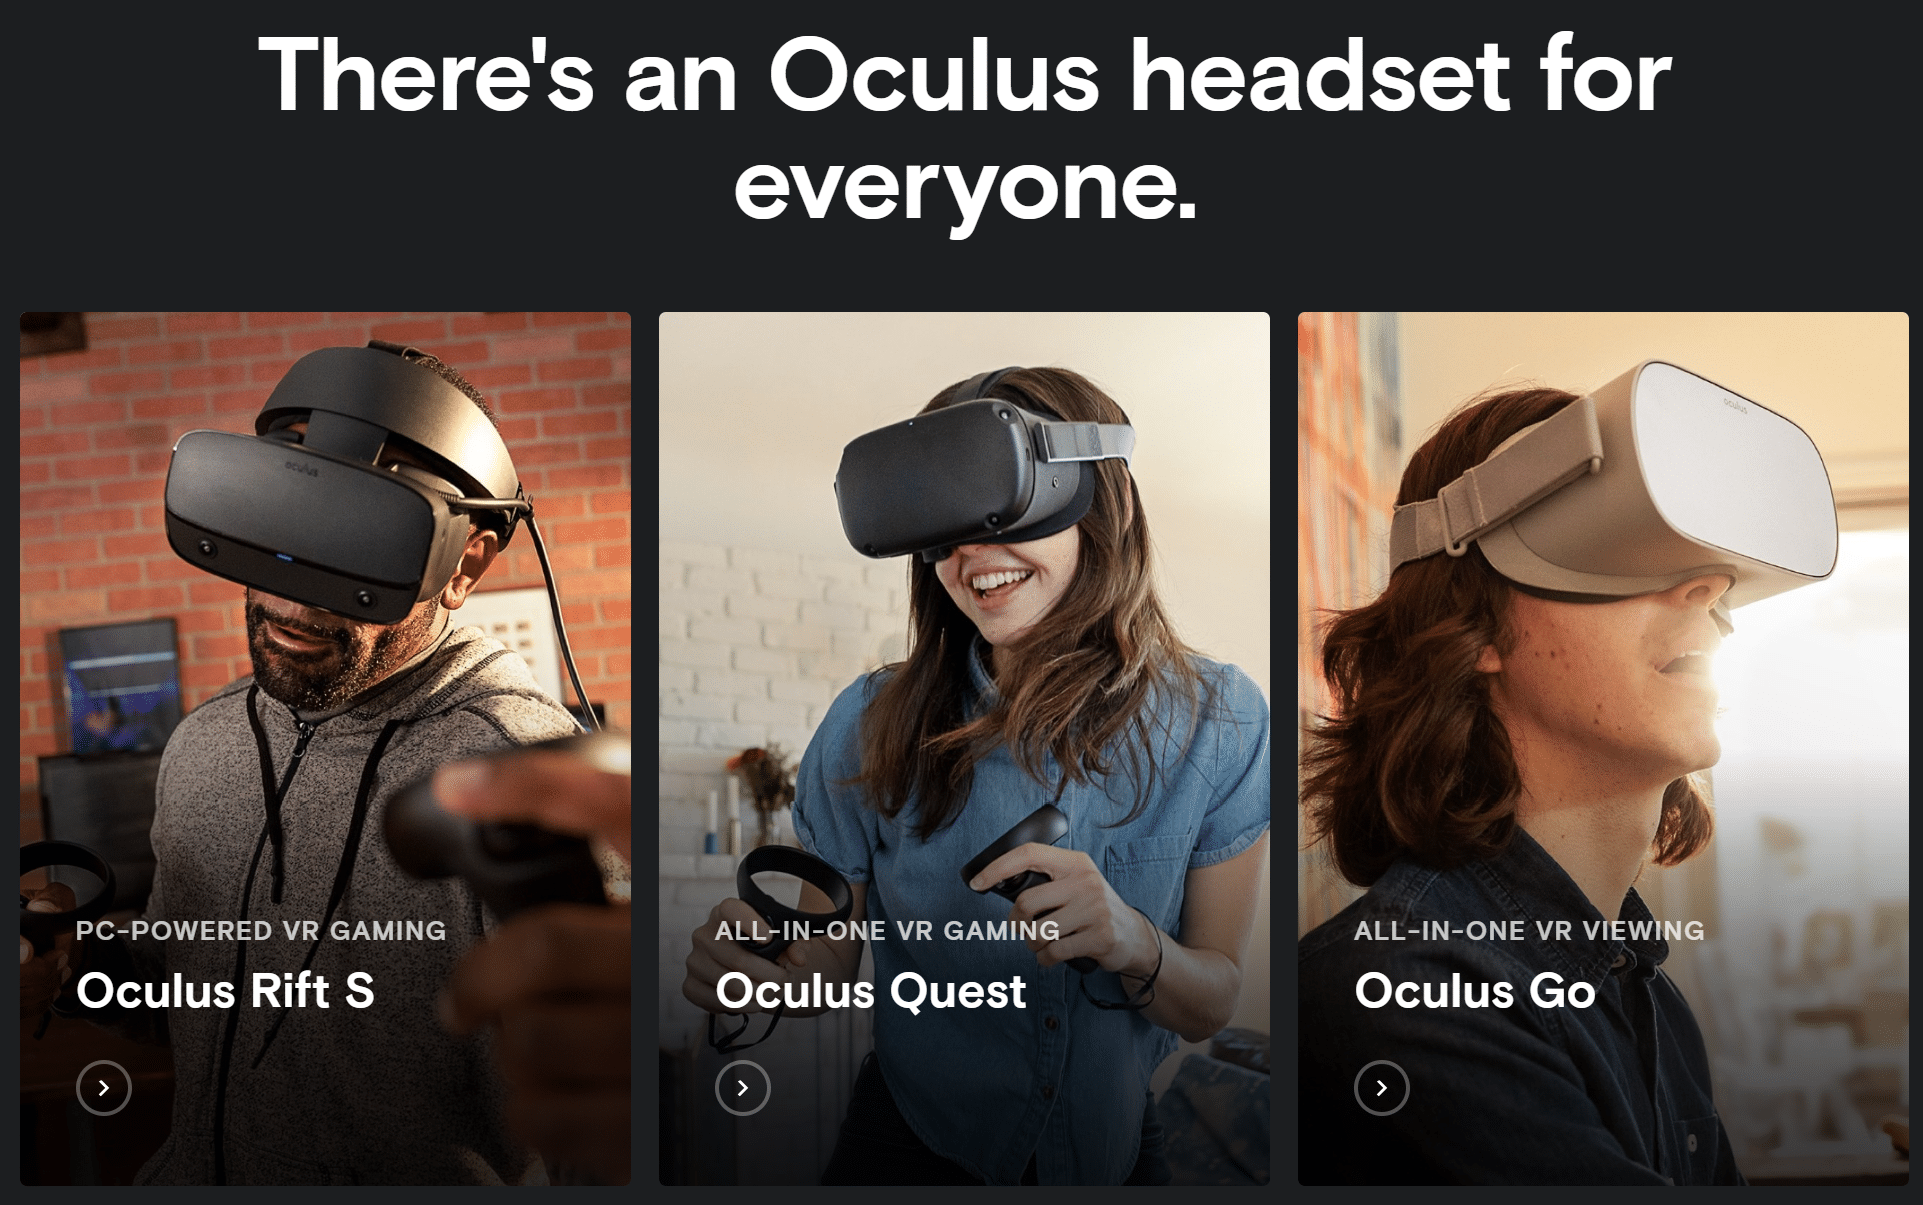 Oculus Headset Everyone